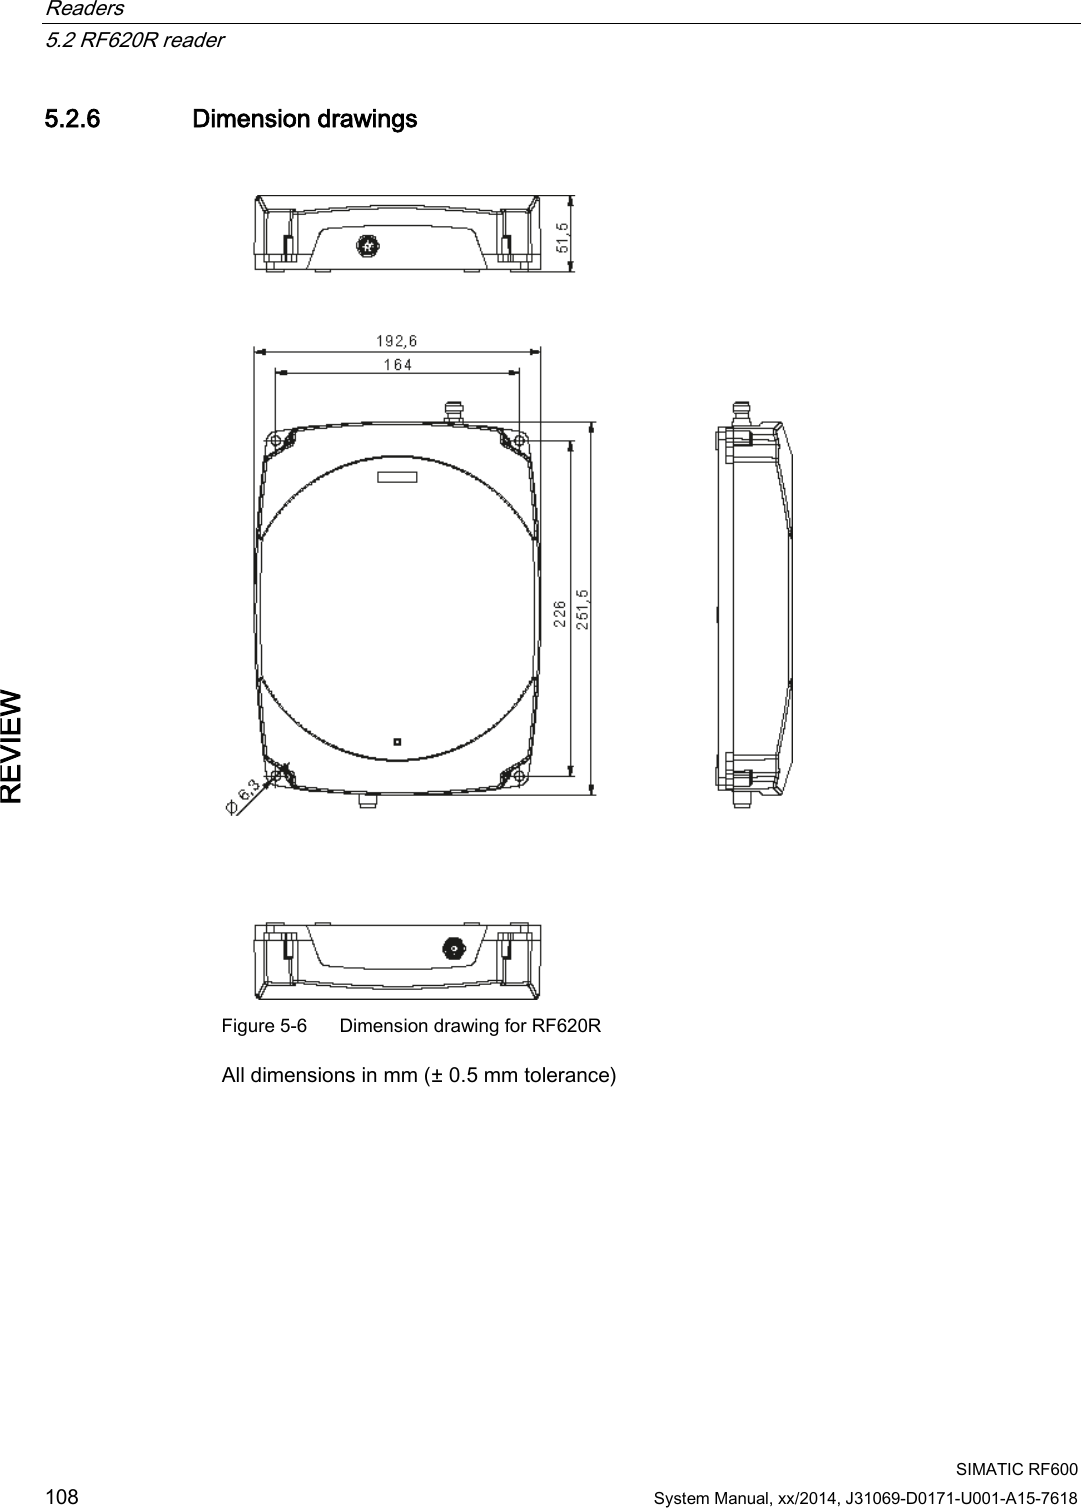 Readers   5.2 RF620R reader  SIMATIC RF600 108 System Manual, xx/2014, J31069-D0171-U001-A15-7618 REVIEW 5.2.6 Dimension drawings      Figure 5-6  Dimension drawing for RF620R All dimensions in mm (± 0.5 mm tolerance) 